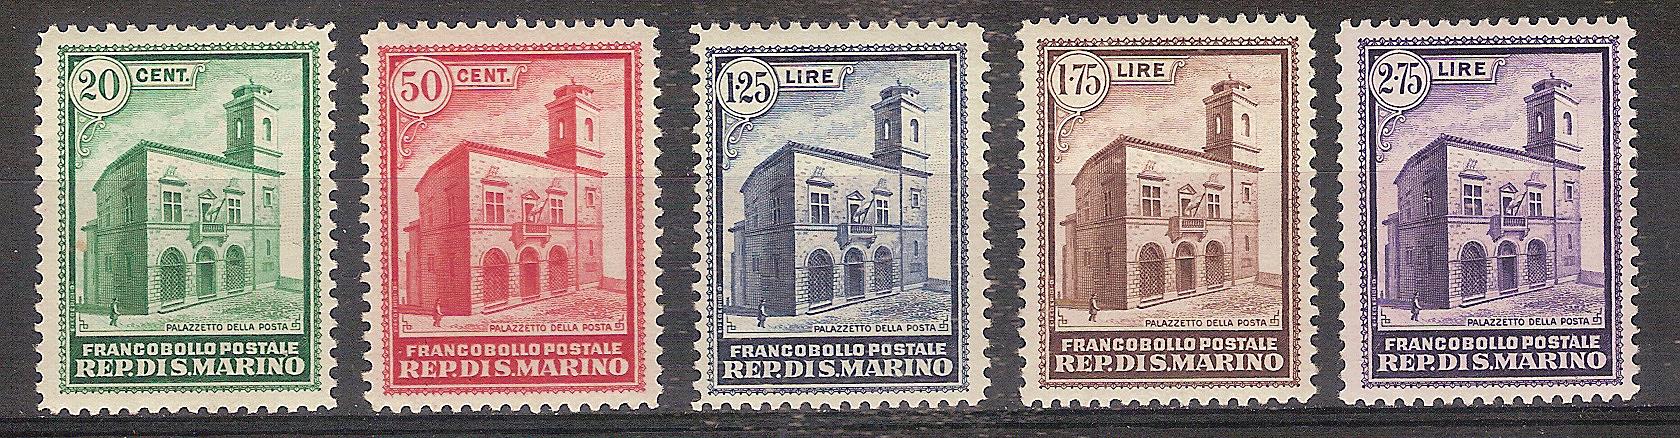 San Marino 159-163 001